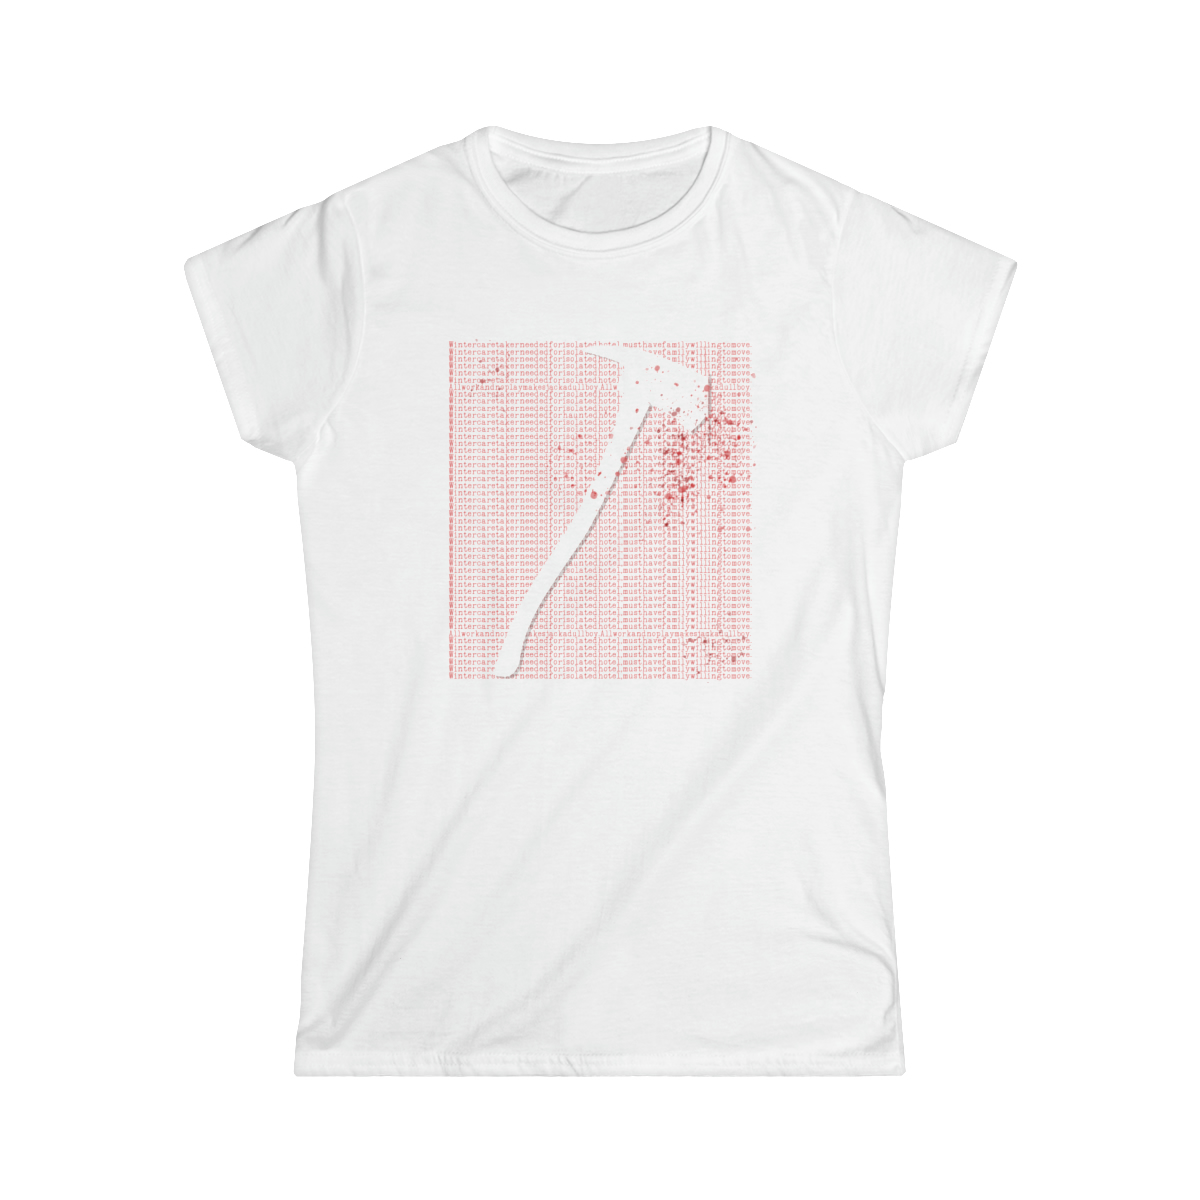 Axe (light shirts) - Women's Softstyle Tee